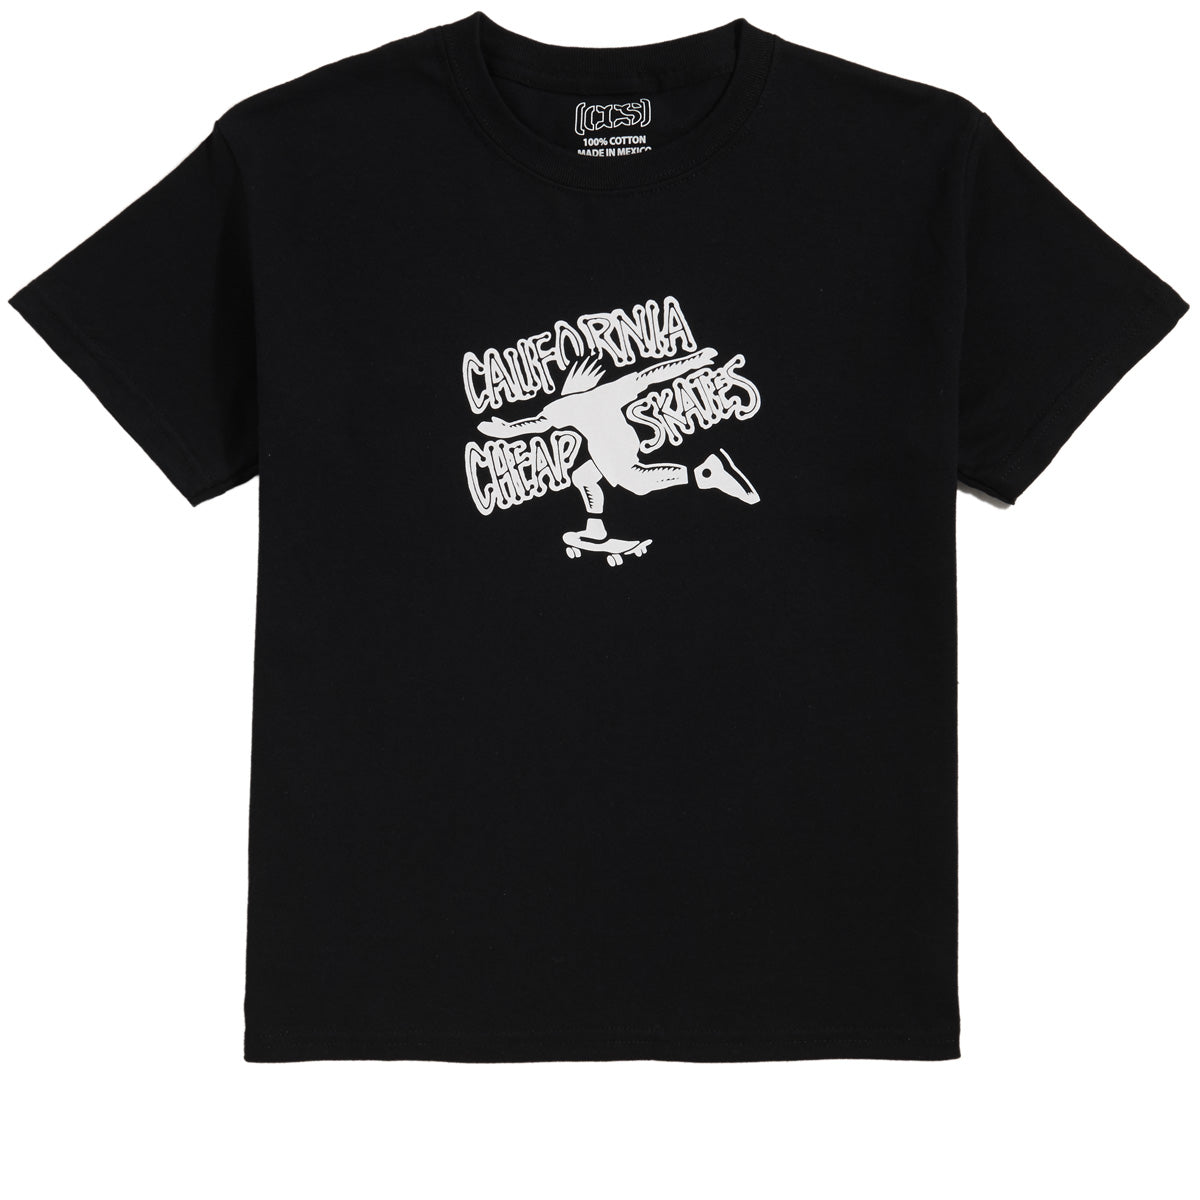 CCS Youth Cheap Skates T-Shirt - Black/Glow image 1